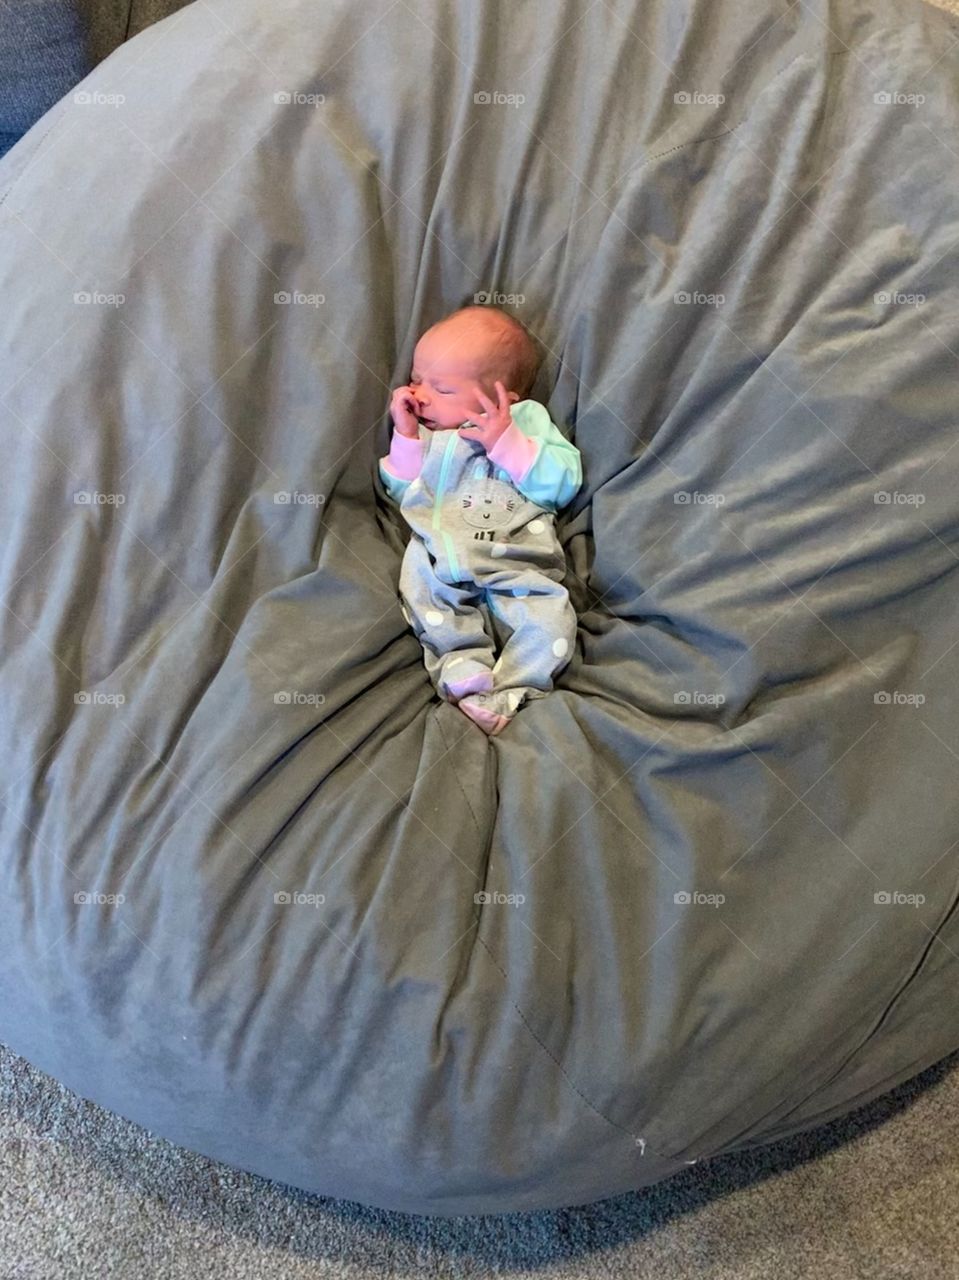 Big beanbag, little baby. Opposites attract 